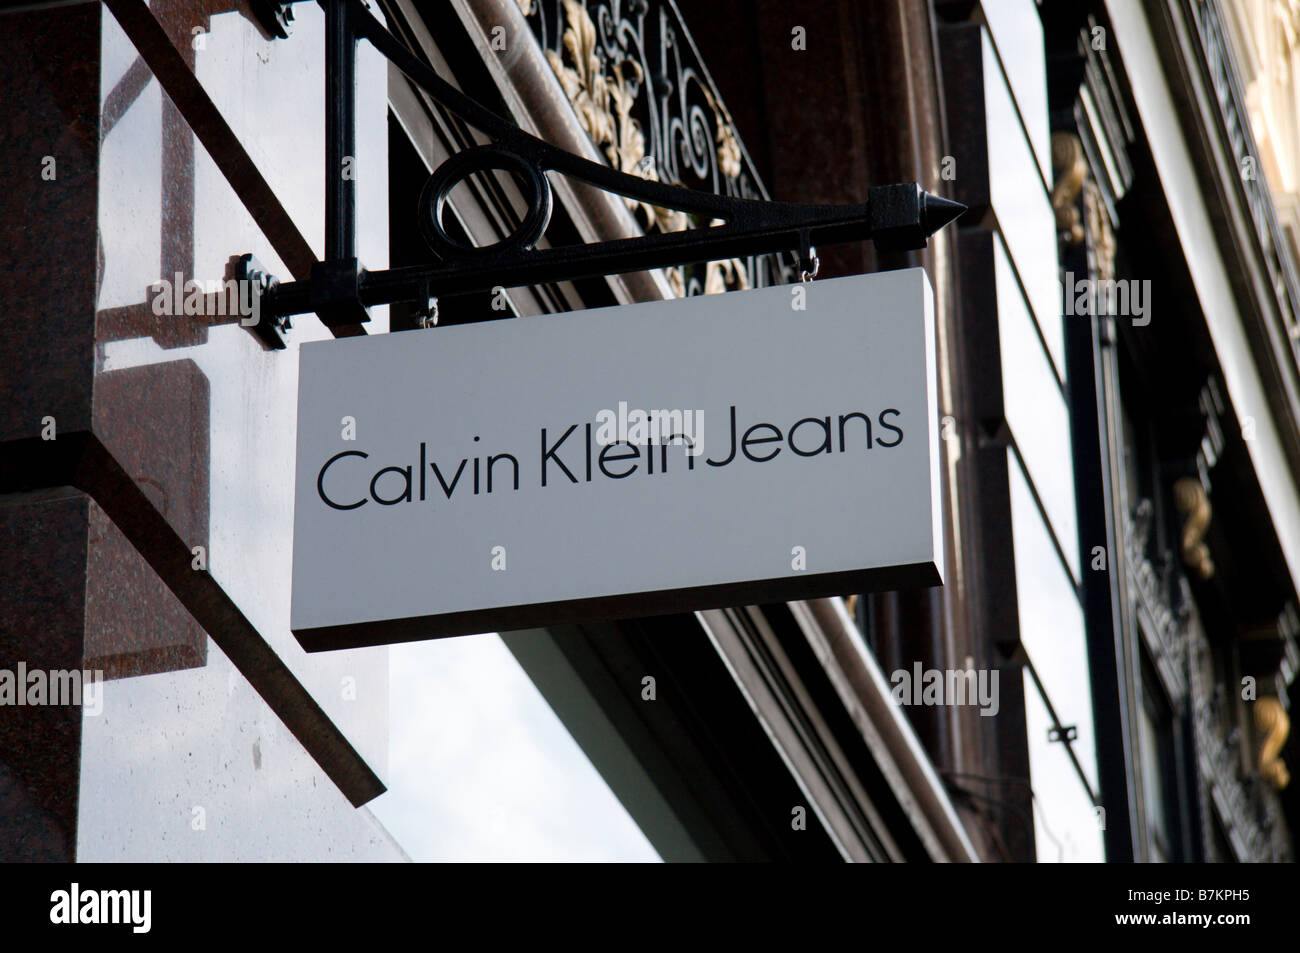 A shop sign for the Calvin Klein Jeans shop, Regents Street, London